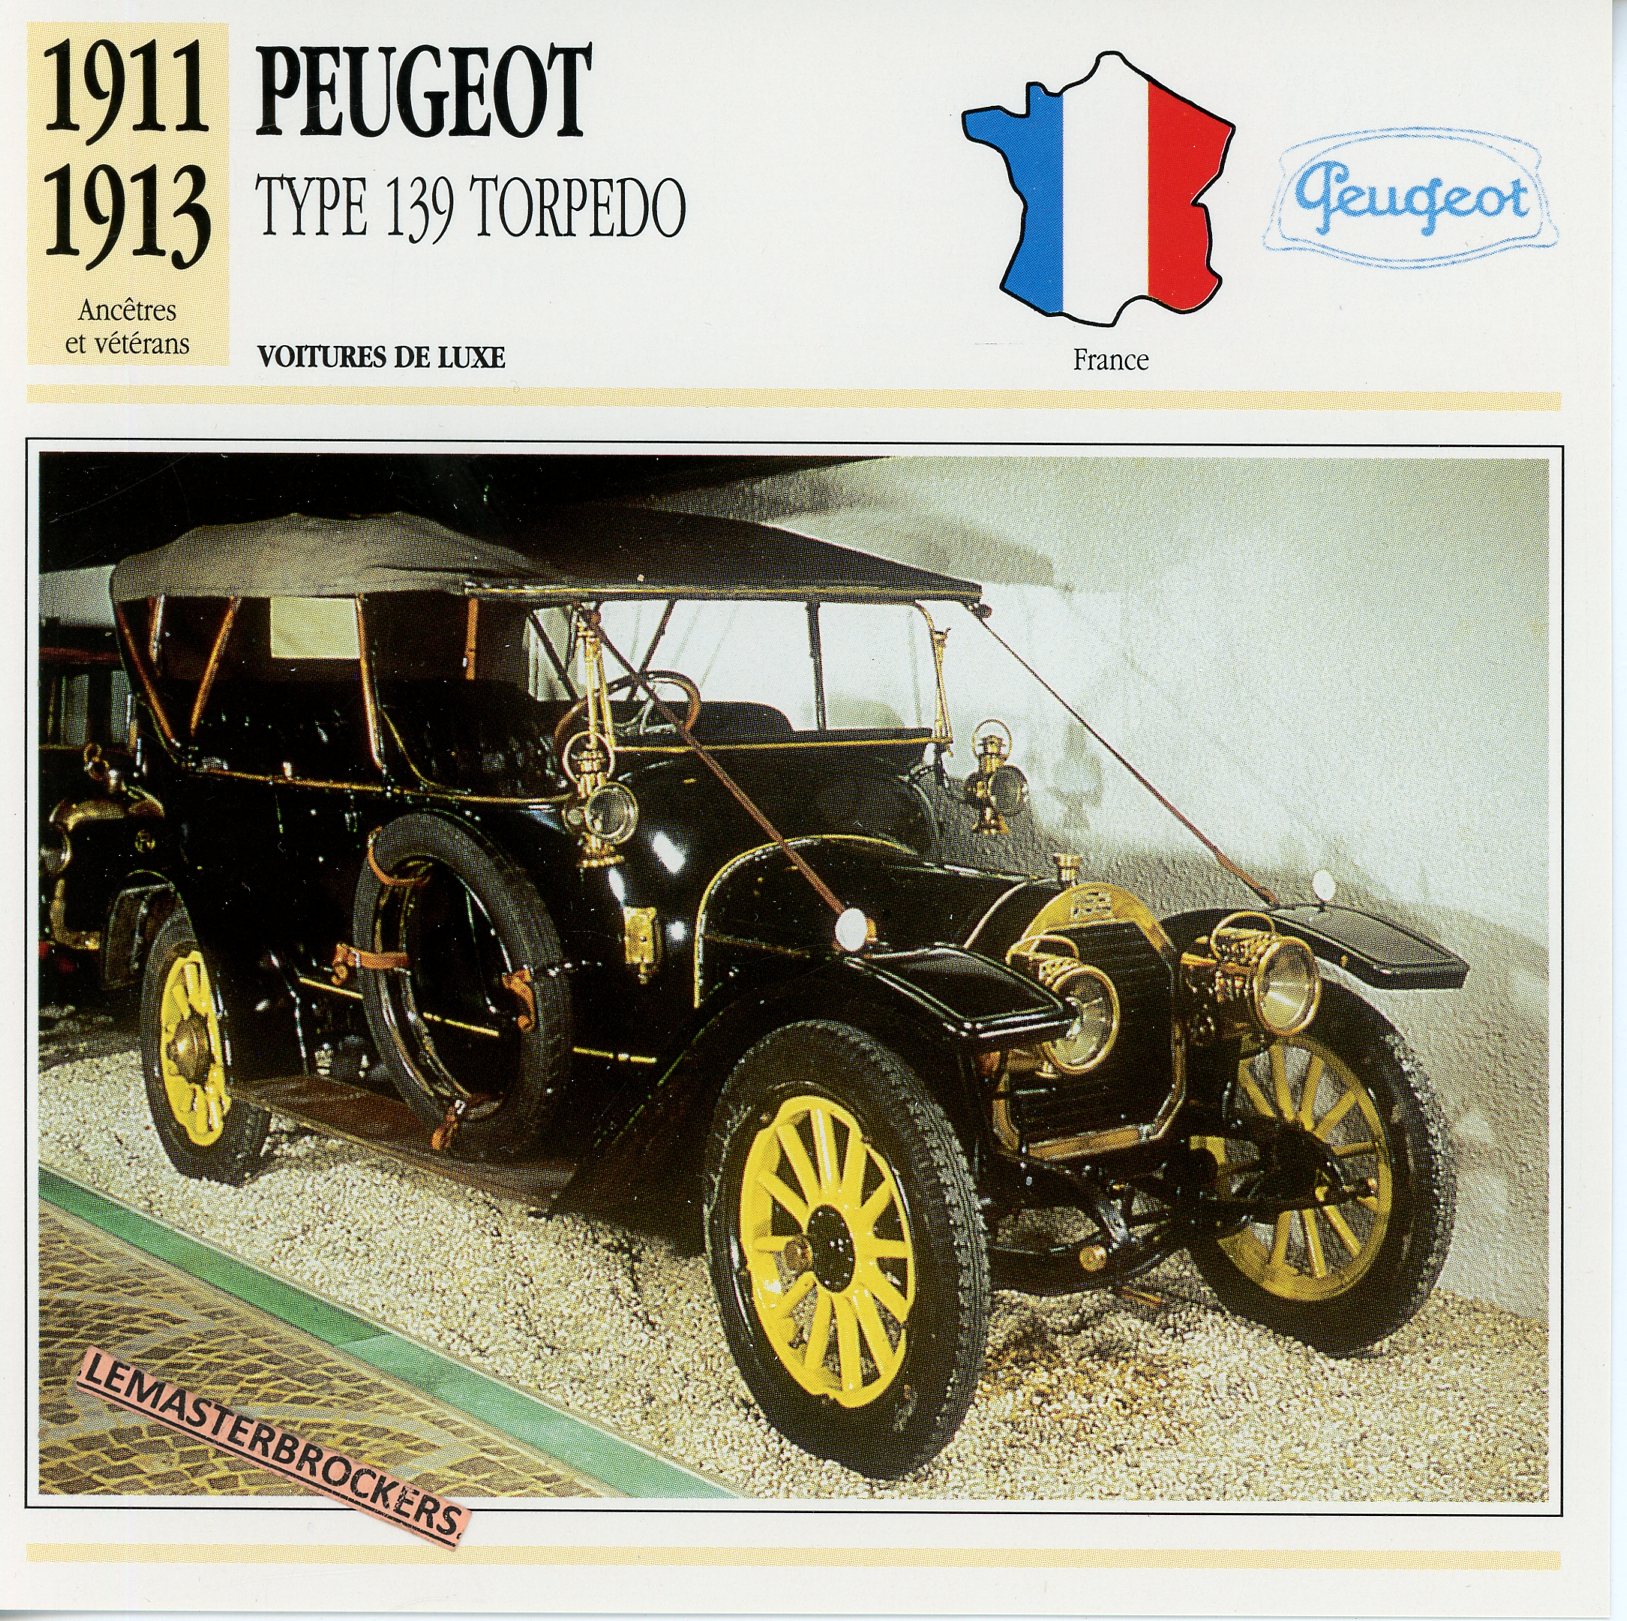 PEUGEOT-TORPEDO-1911-1913-FICHE-AUTO-ATLAS-LEMASTERBROCKERS